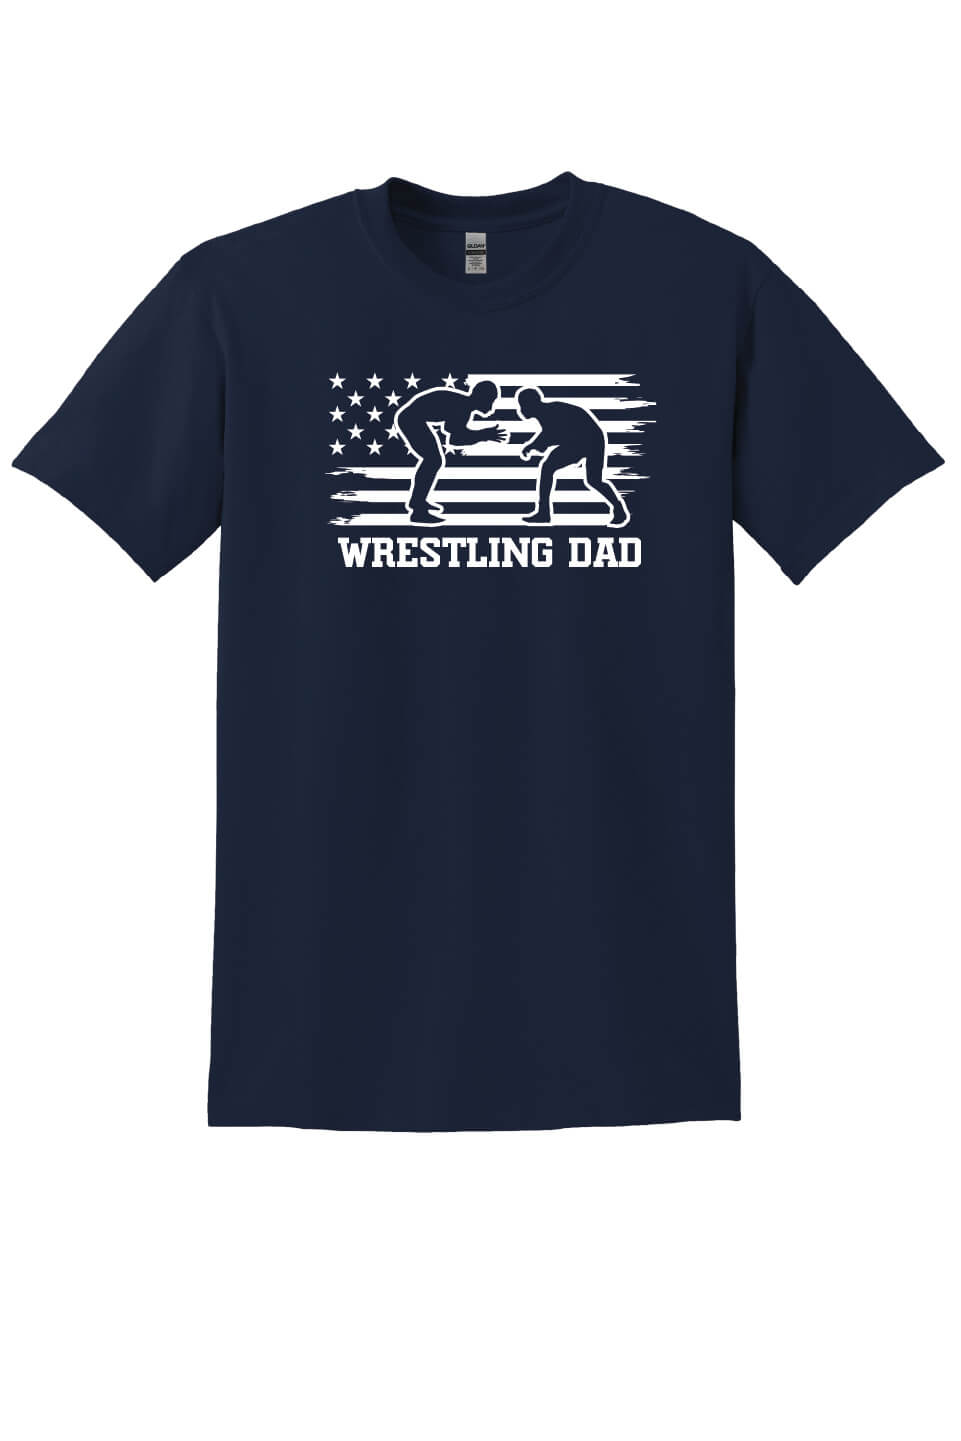 Wrestling Dad Short Sleeve T-Shirt navy